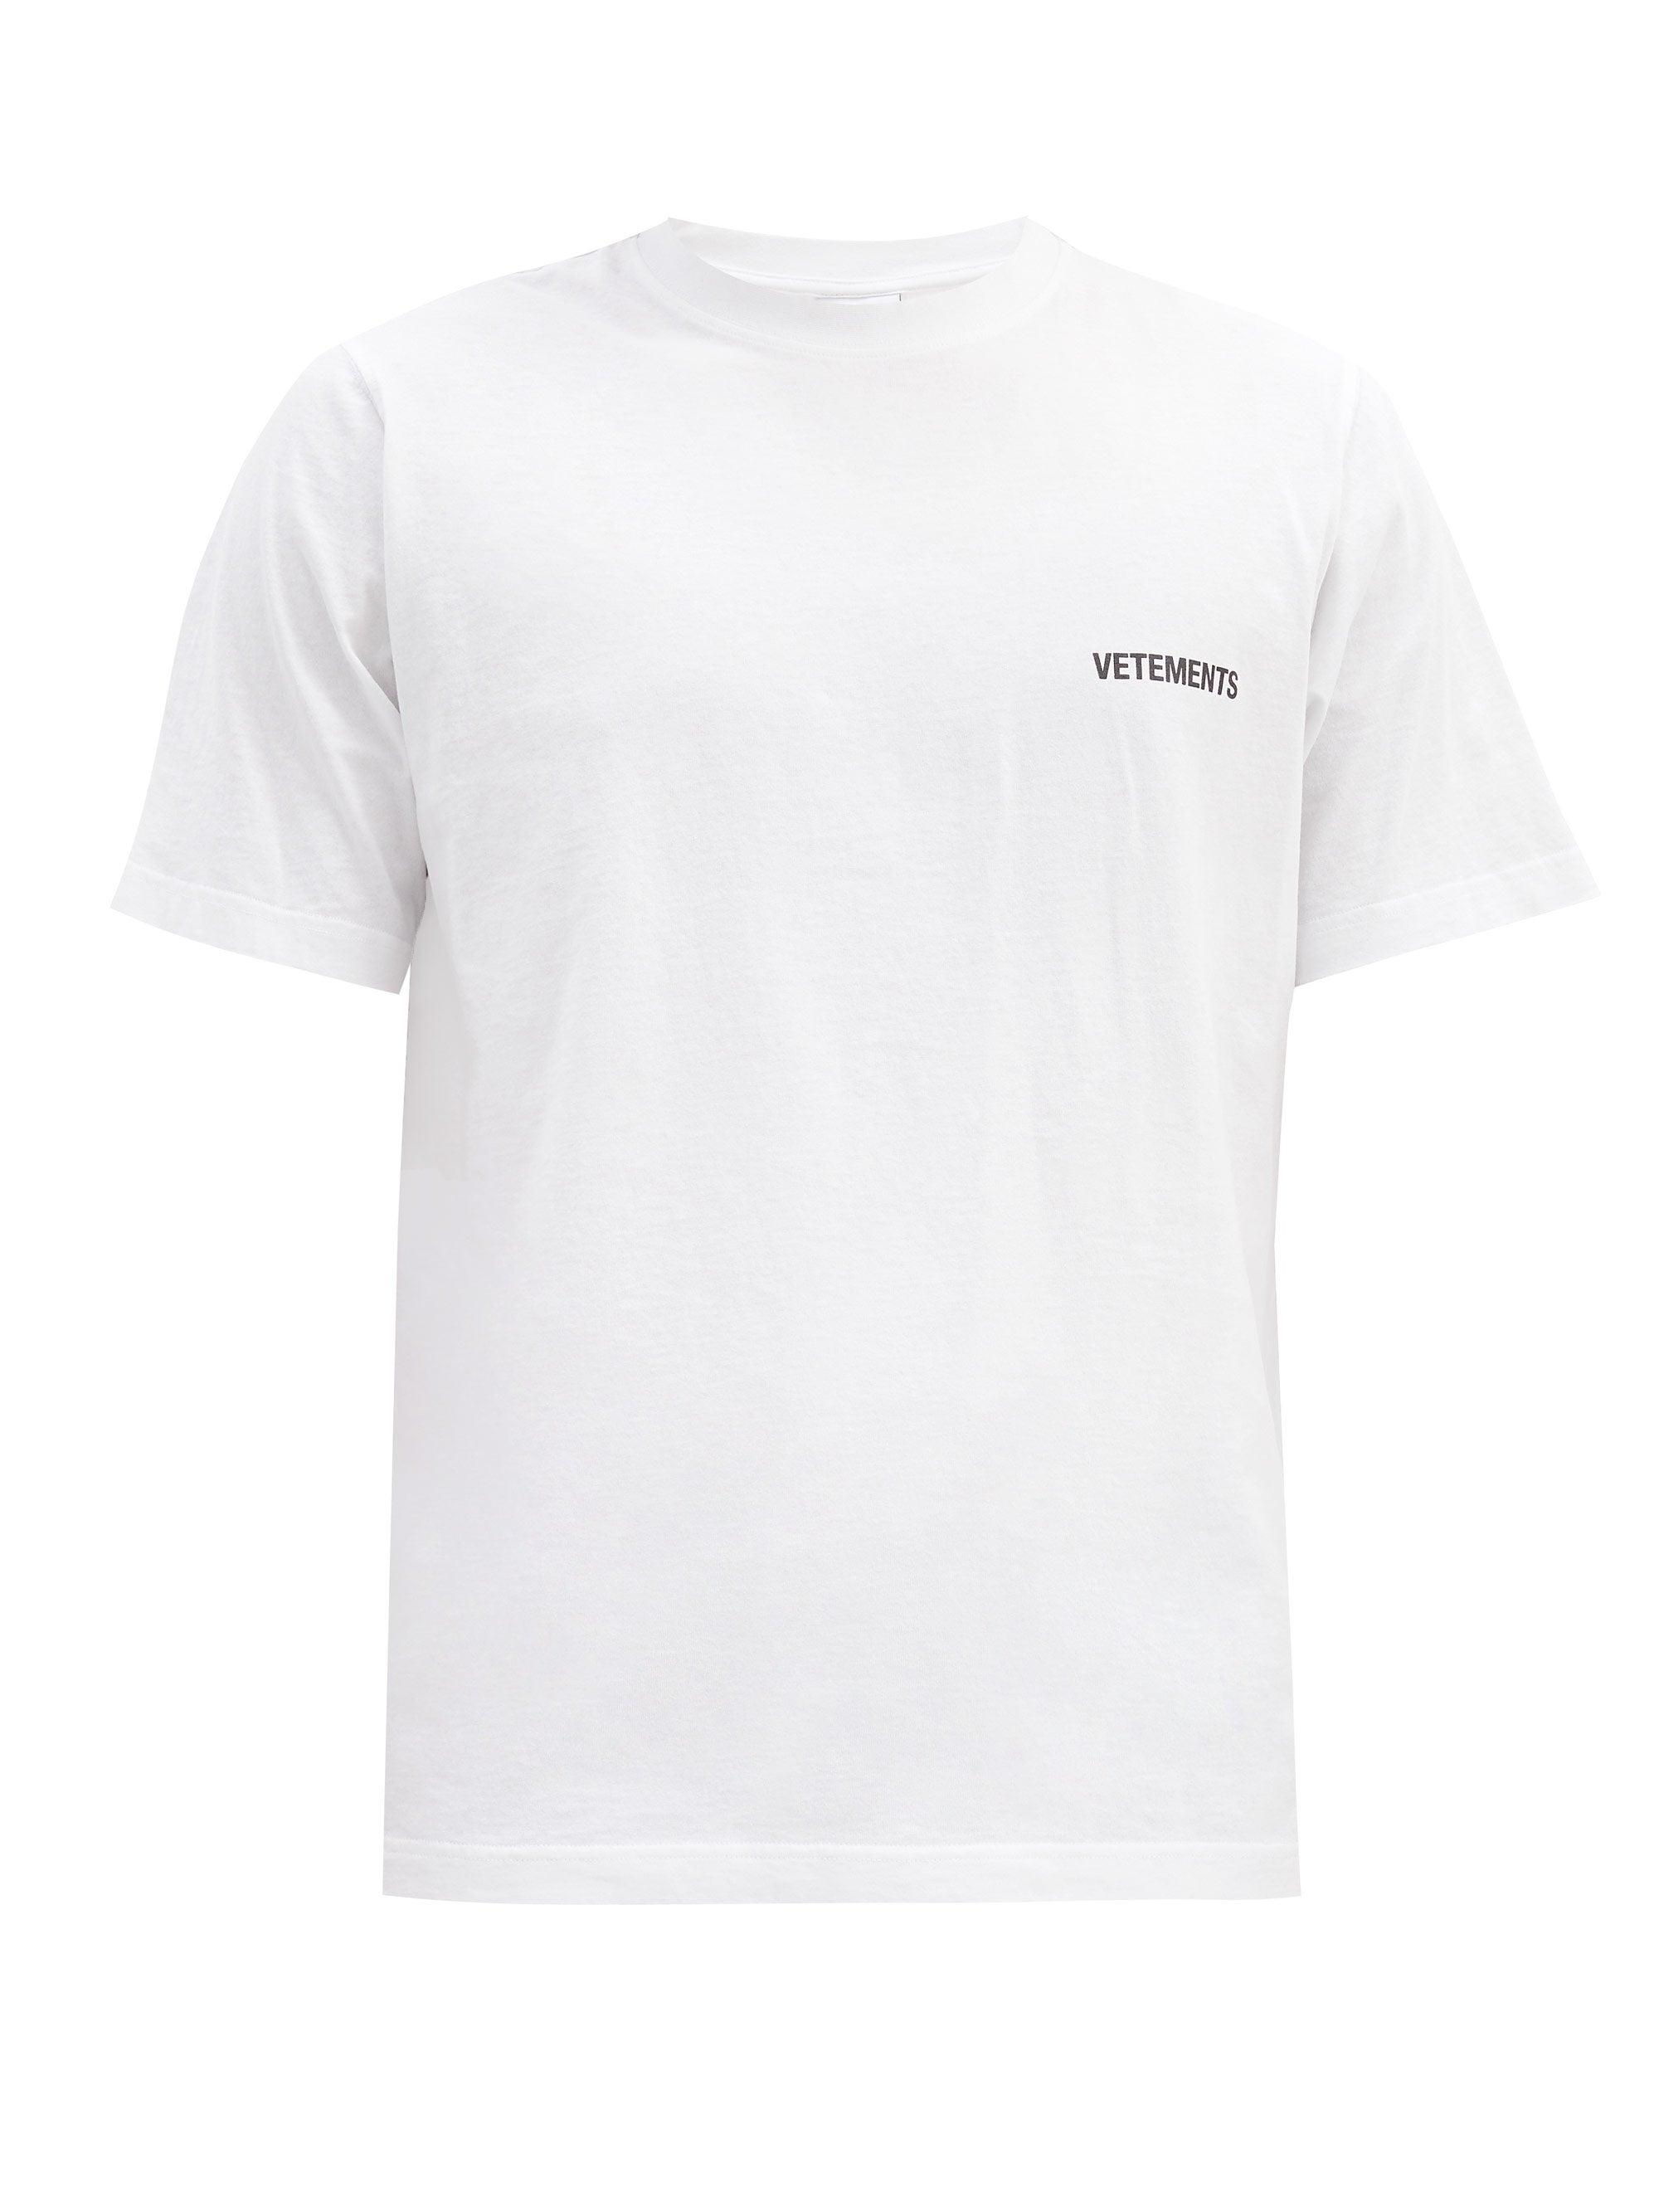 Vetements Logo-print Cotton-jersey T-shirt in White for Men - Lyst